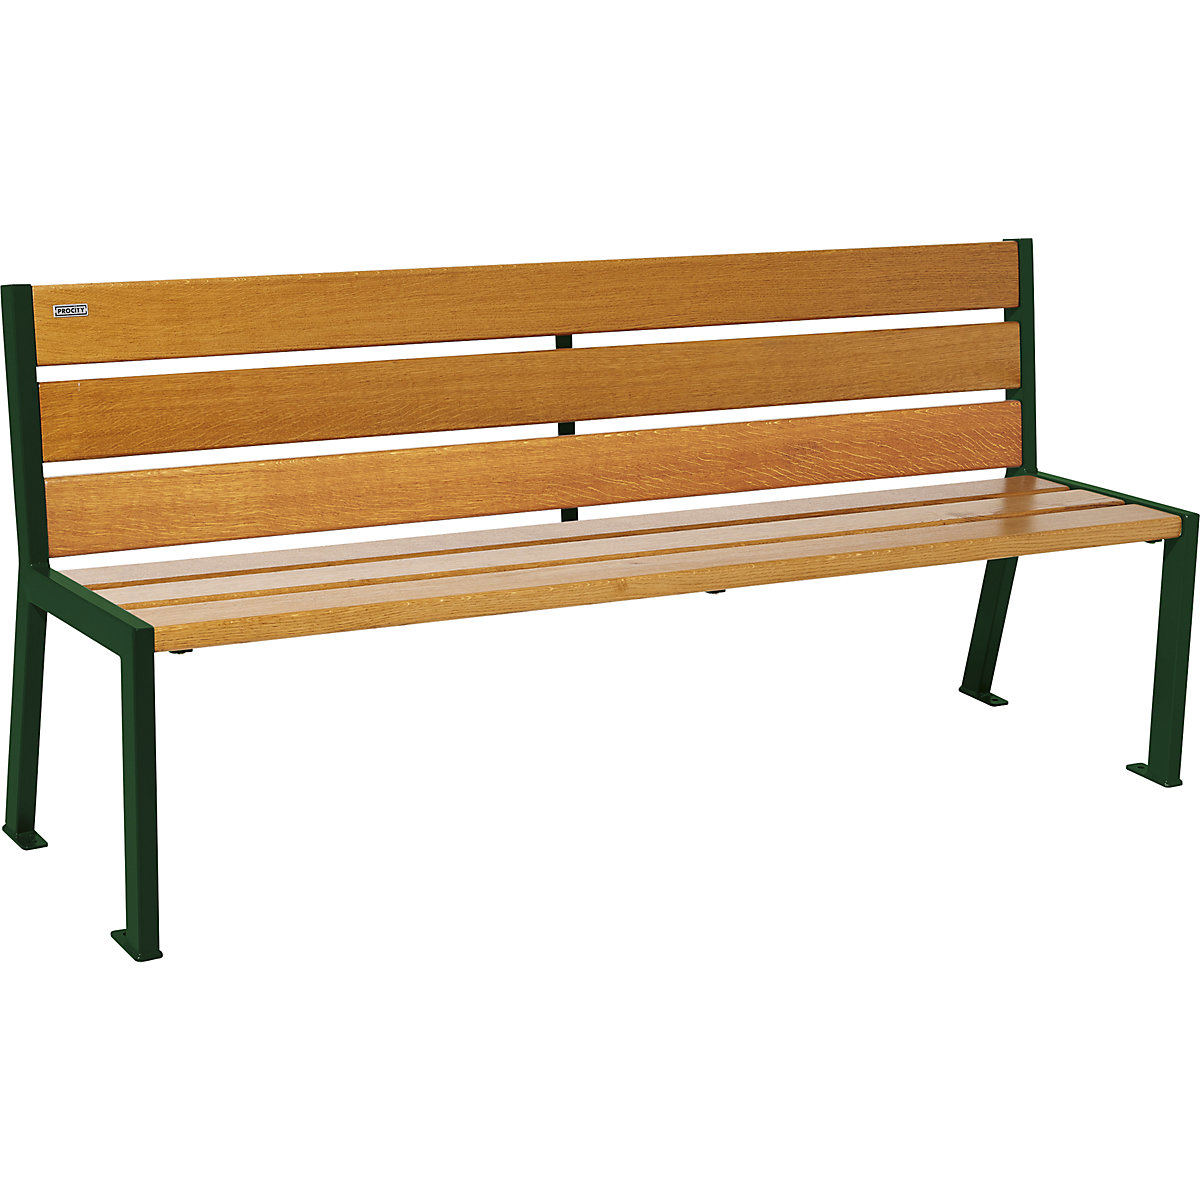 Sitzbank SILAOS® aus Holz PROCITY, mit Rückenlehne, Länge 1800 mm, moosgrün RAL 6005, Eiche-Dekor hell-3